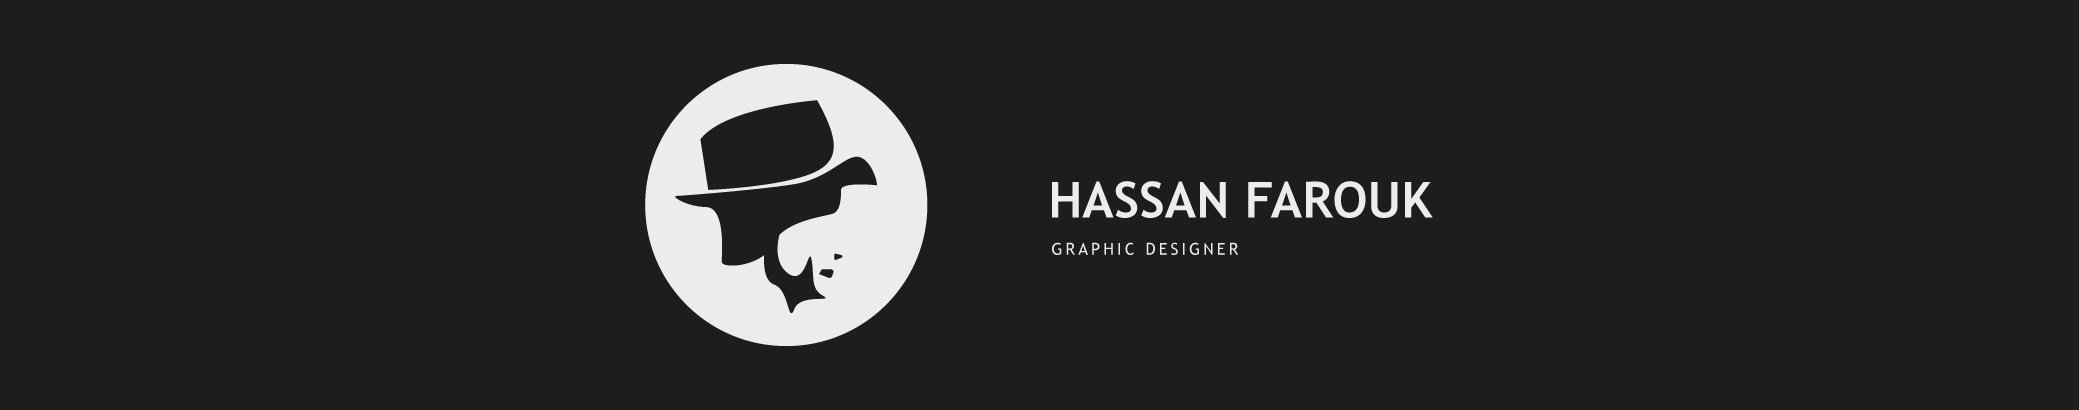 Баннер профиля Hassan Farouk